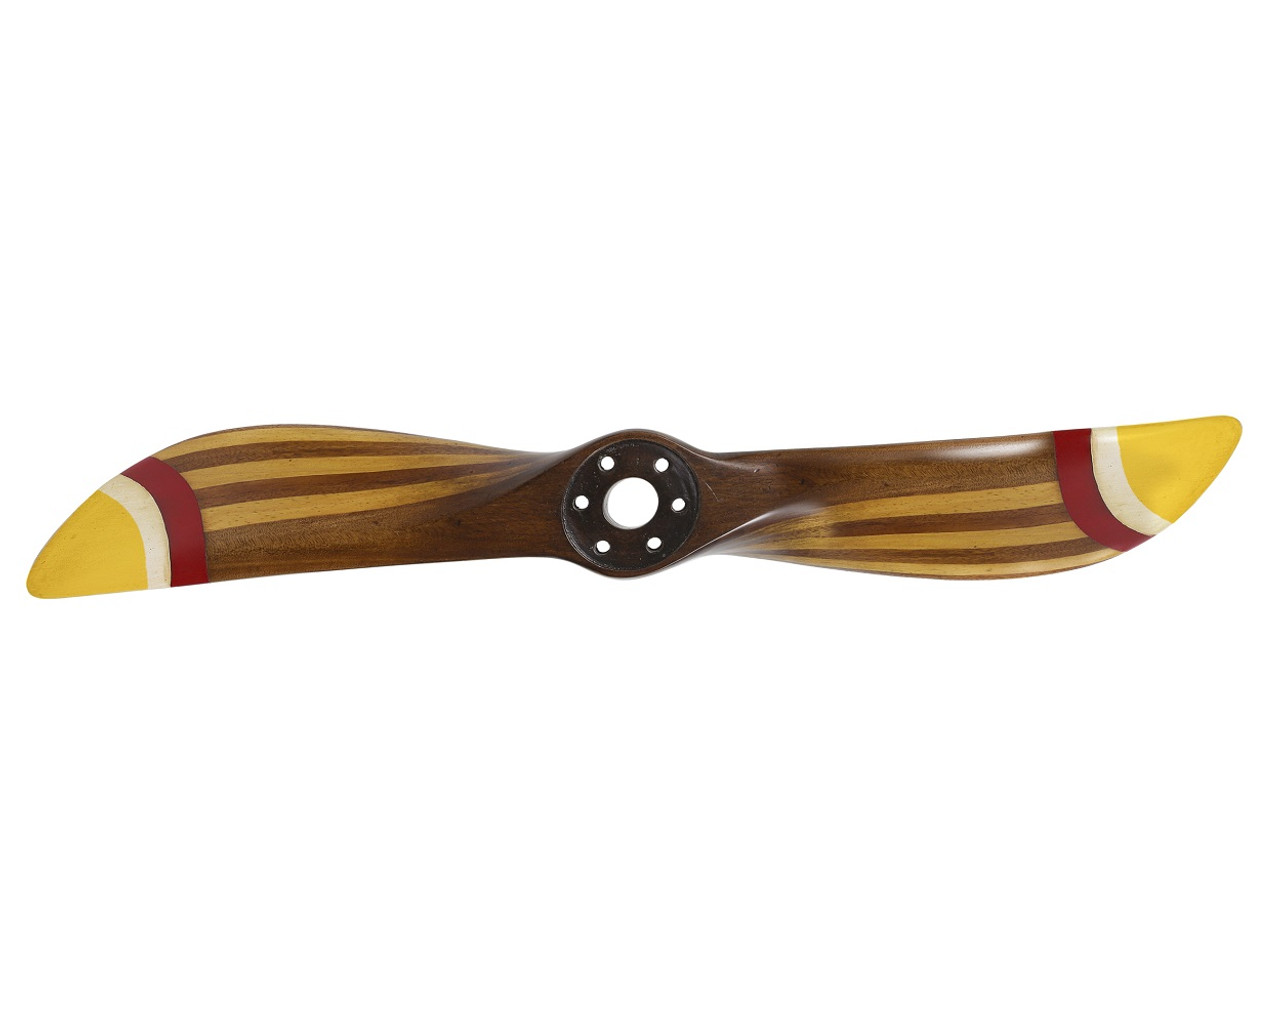 Propeller Laminated Mahogany Wood Multi Colored Tips